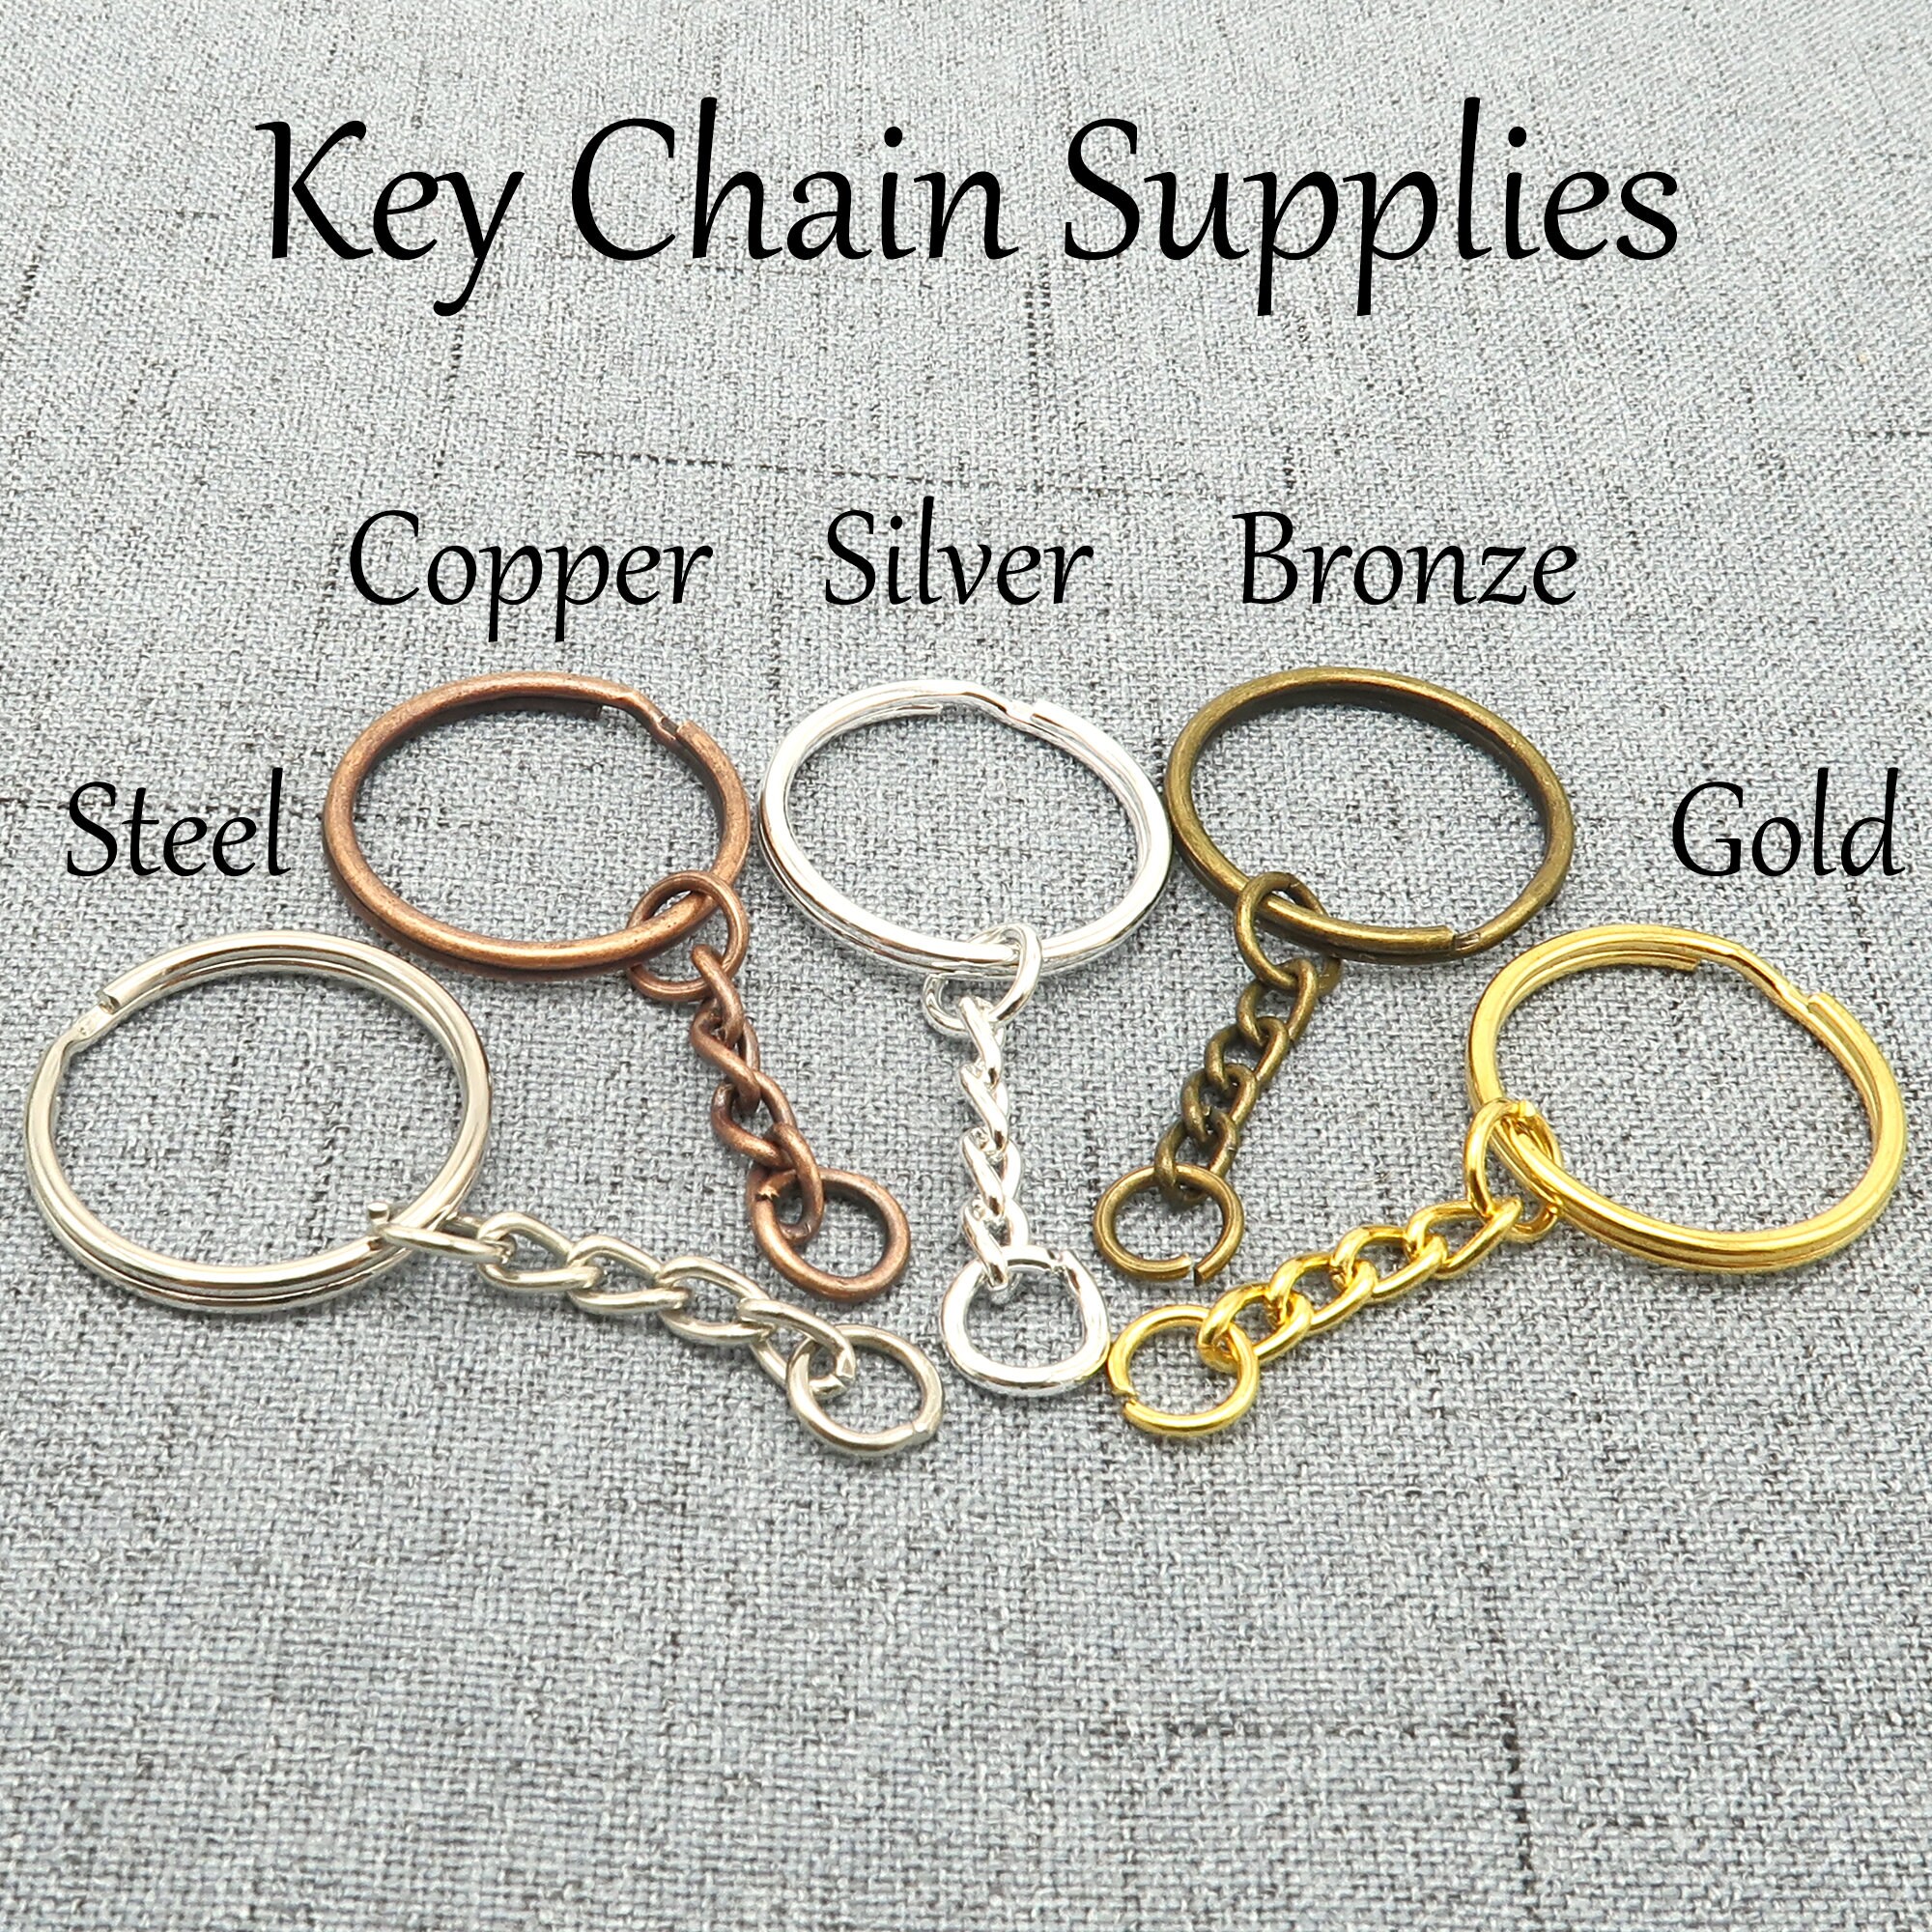 20/30 pcs/lot Key Chain Key Ring Bronze Rhodium Gold Color 28mm Long Round  Split Keyrings Keychain Jewelry Making Wholesale